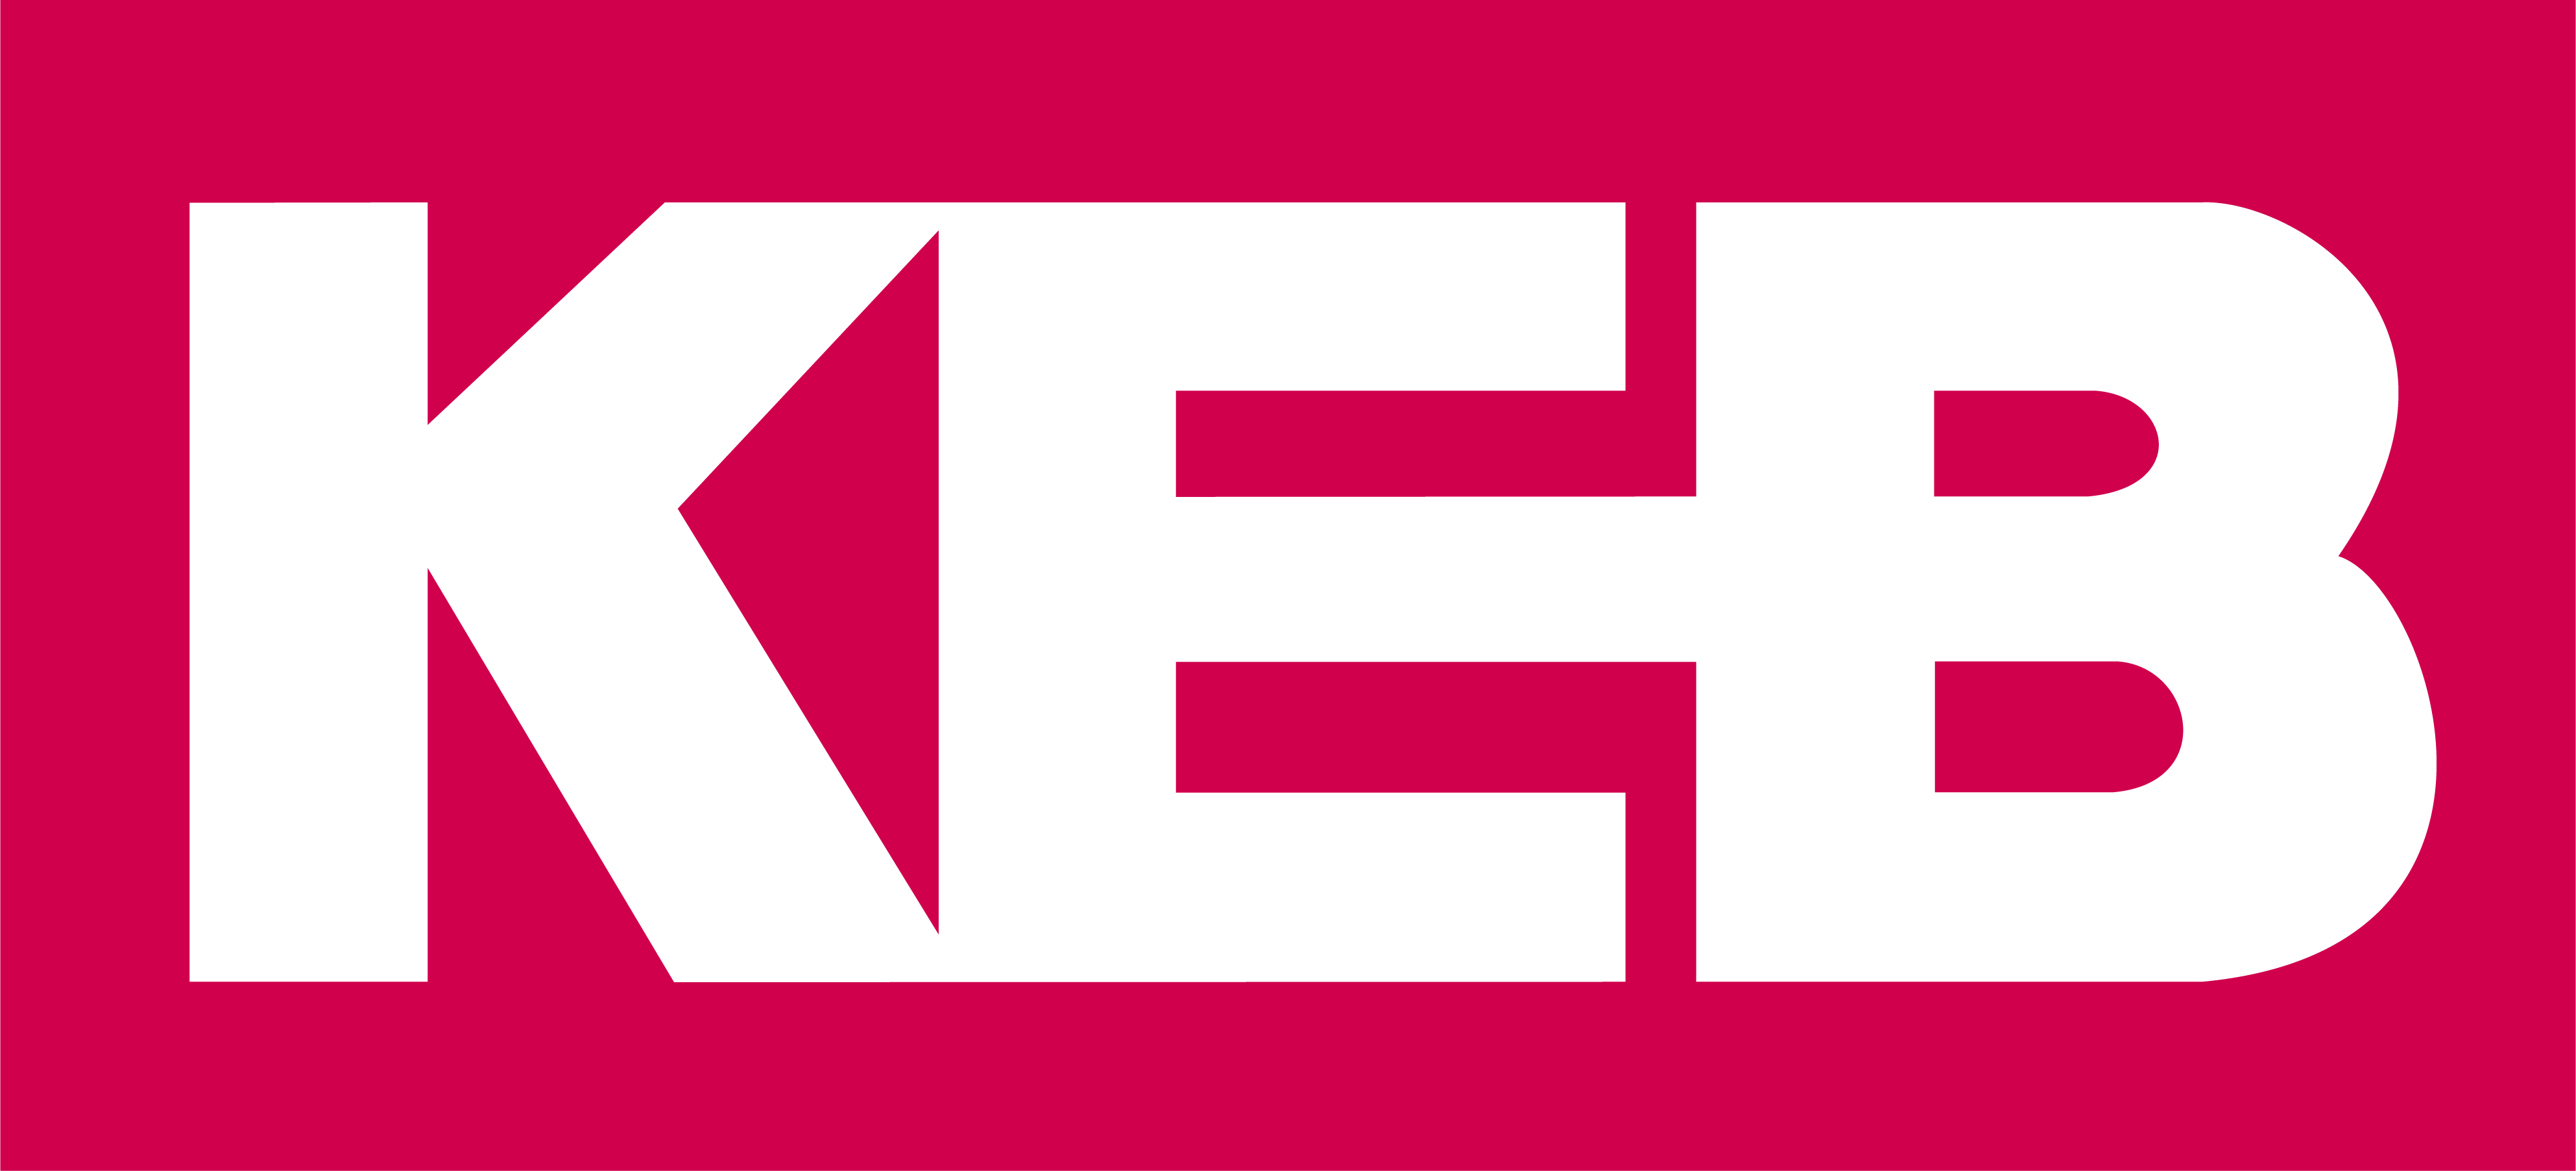 Keb自动化kg标志